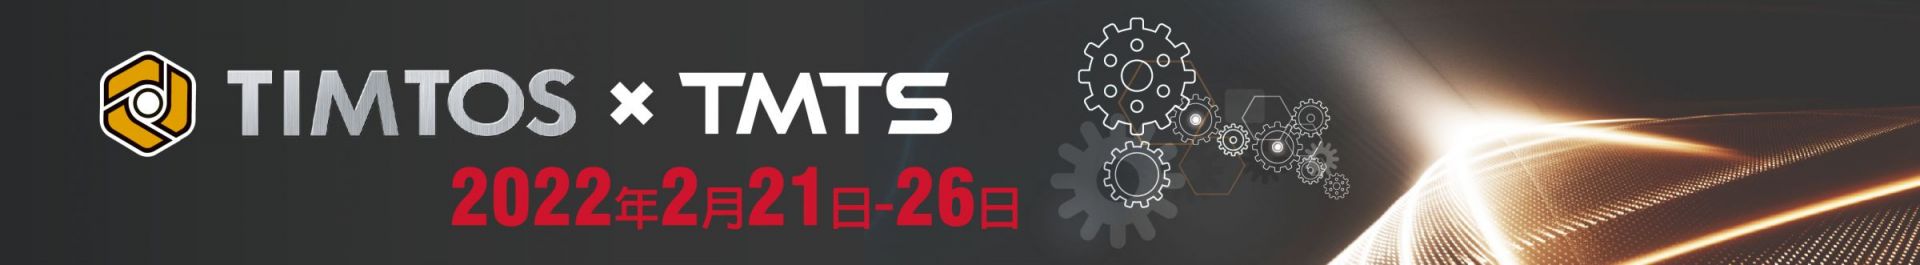 TIMTOS x TMTS 2022 Feira Internacional de Máquinas-Ferramenta de Taipei